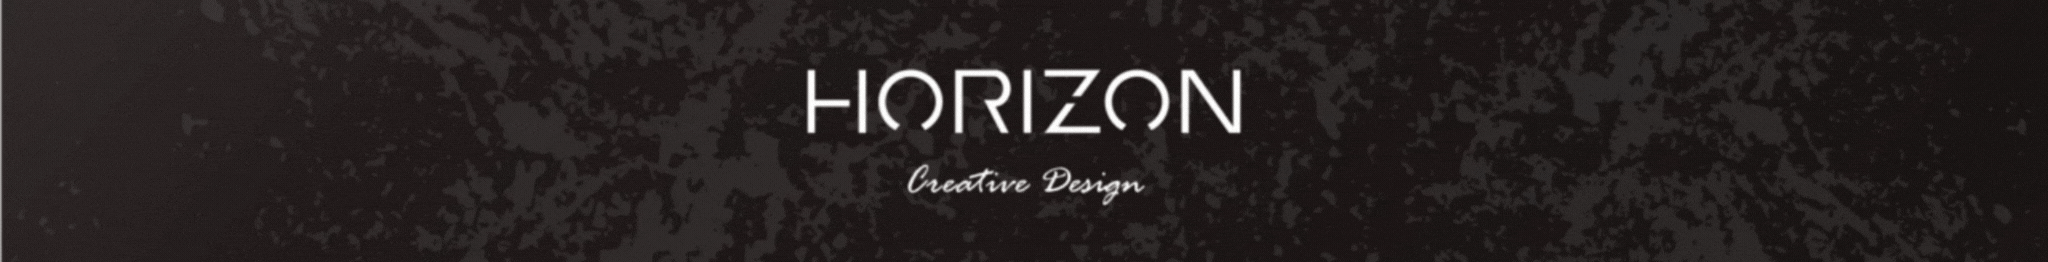 HORIZON Creative Design